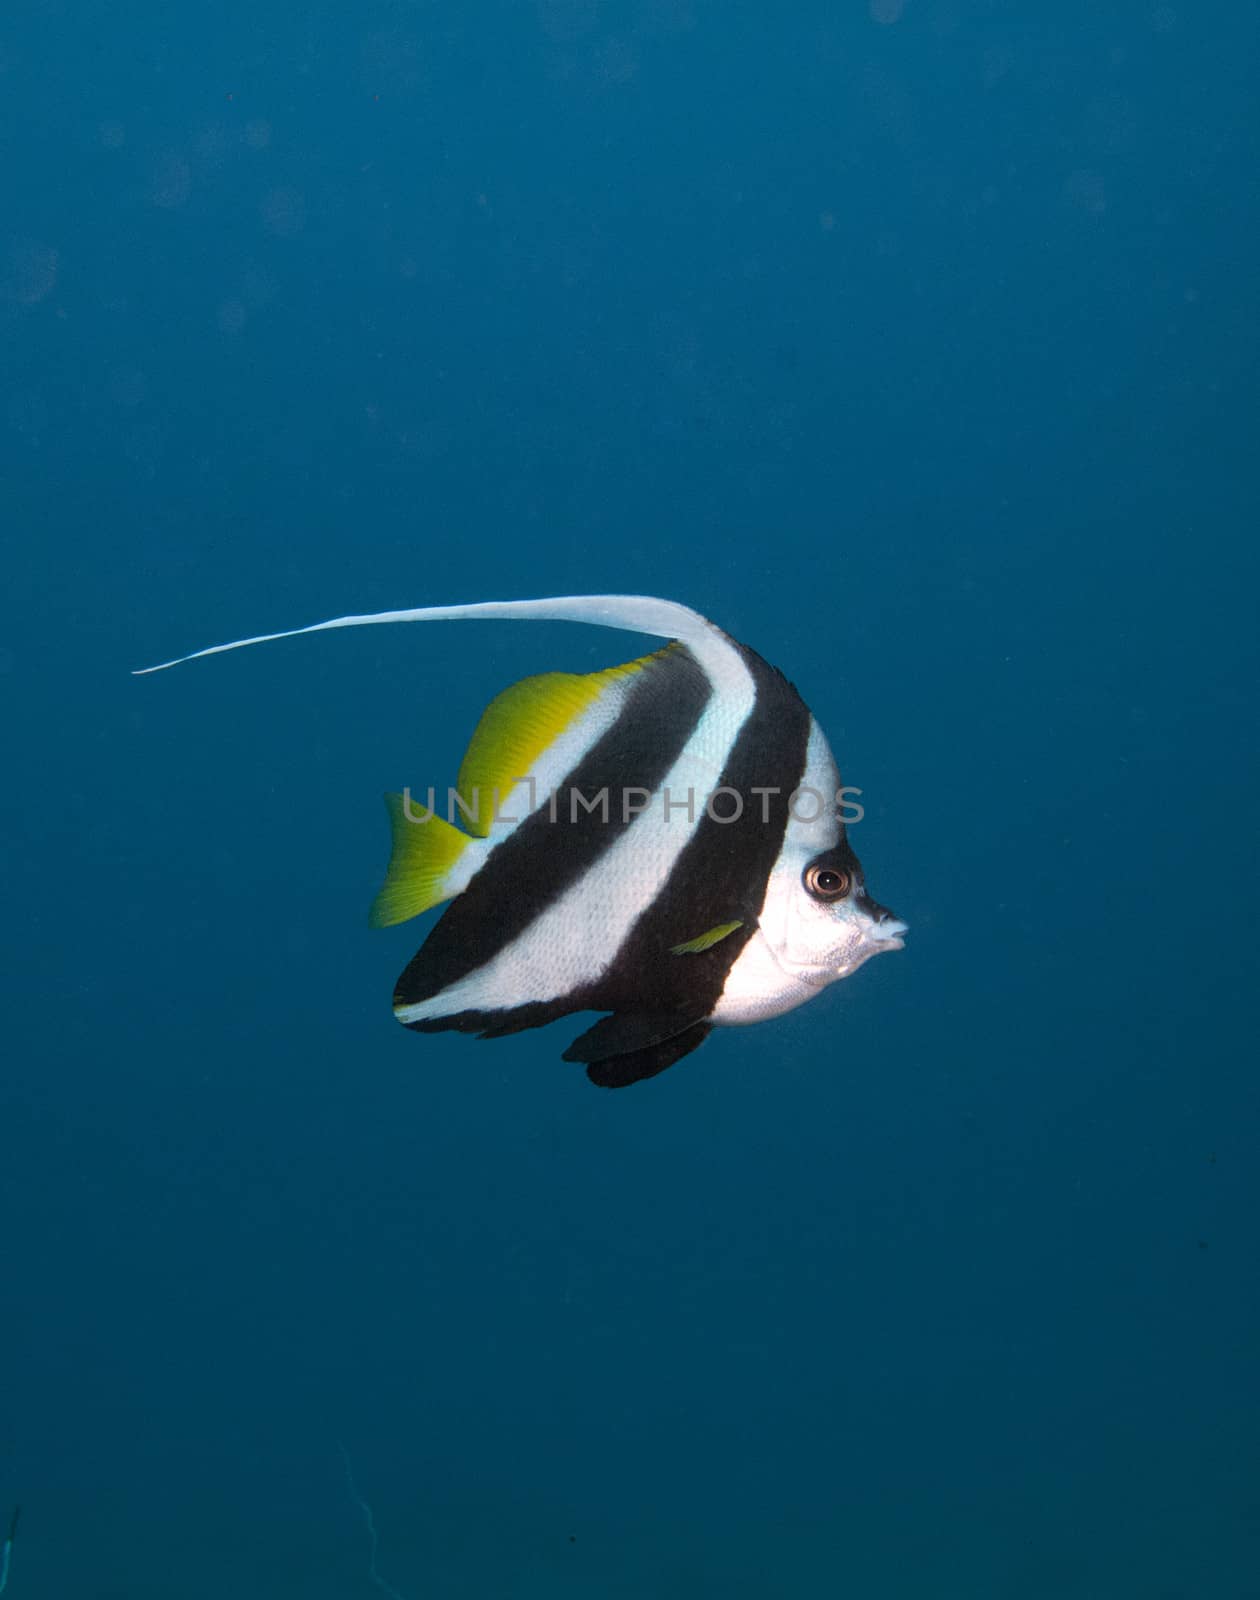 lone bannerfish by AdrianKaye